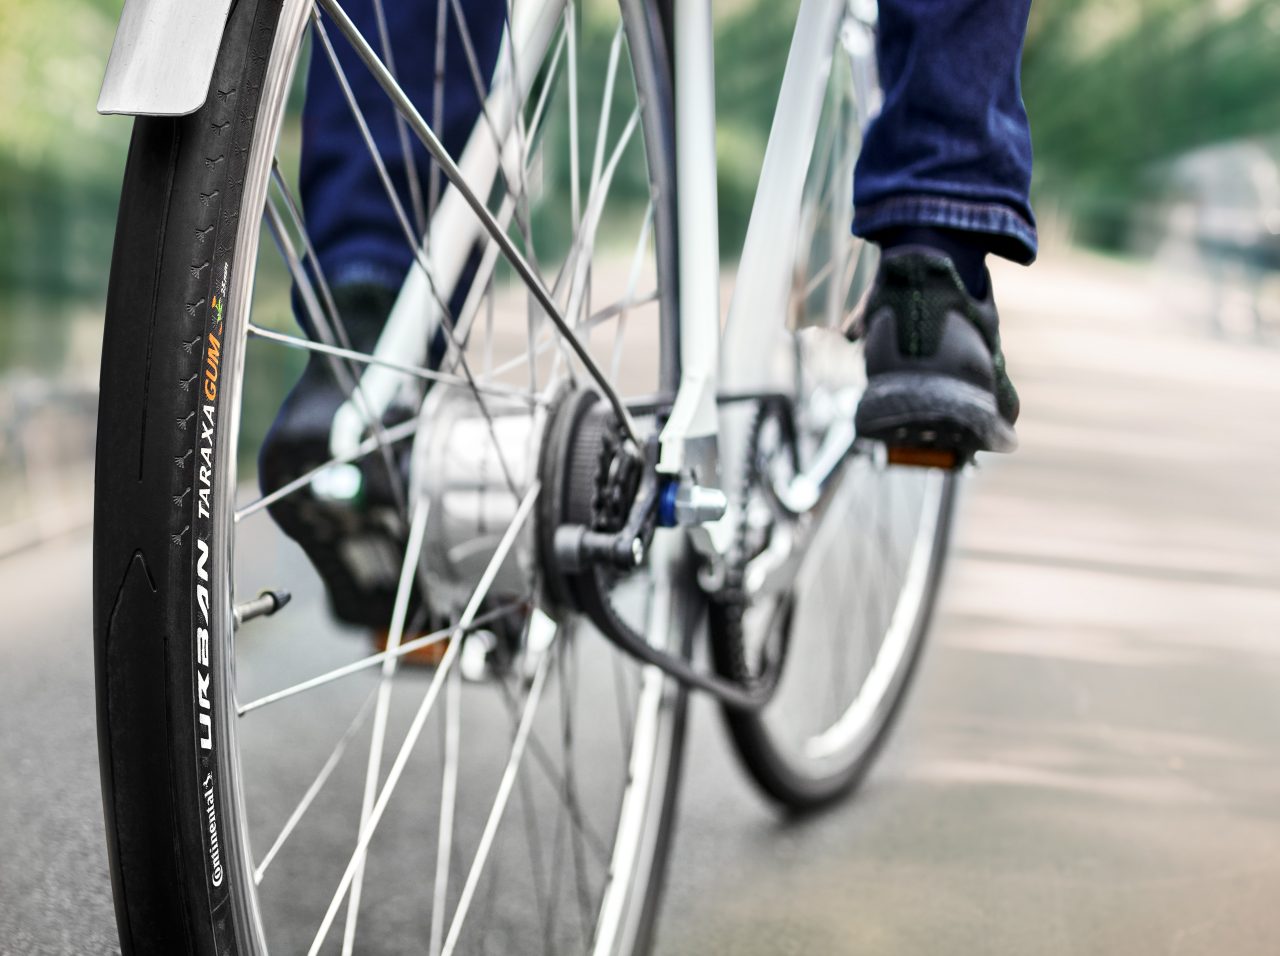 A person riding a bike with Taraxagum tires